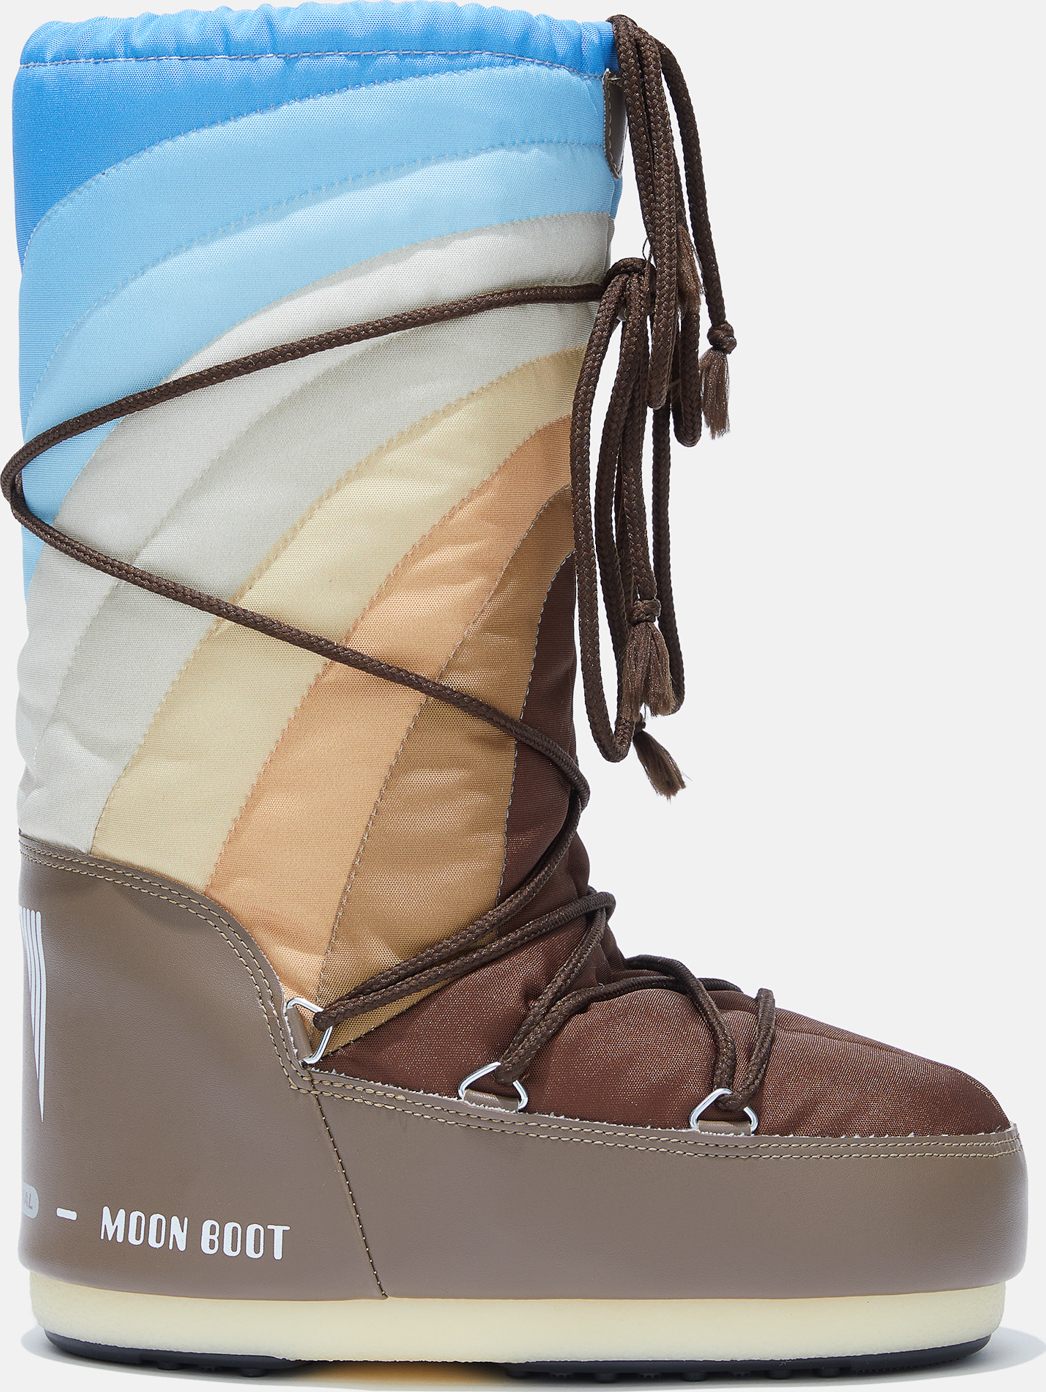 Zimní boty MOON BOOT Icon rainbow hnědé Velikost: EU 39/41